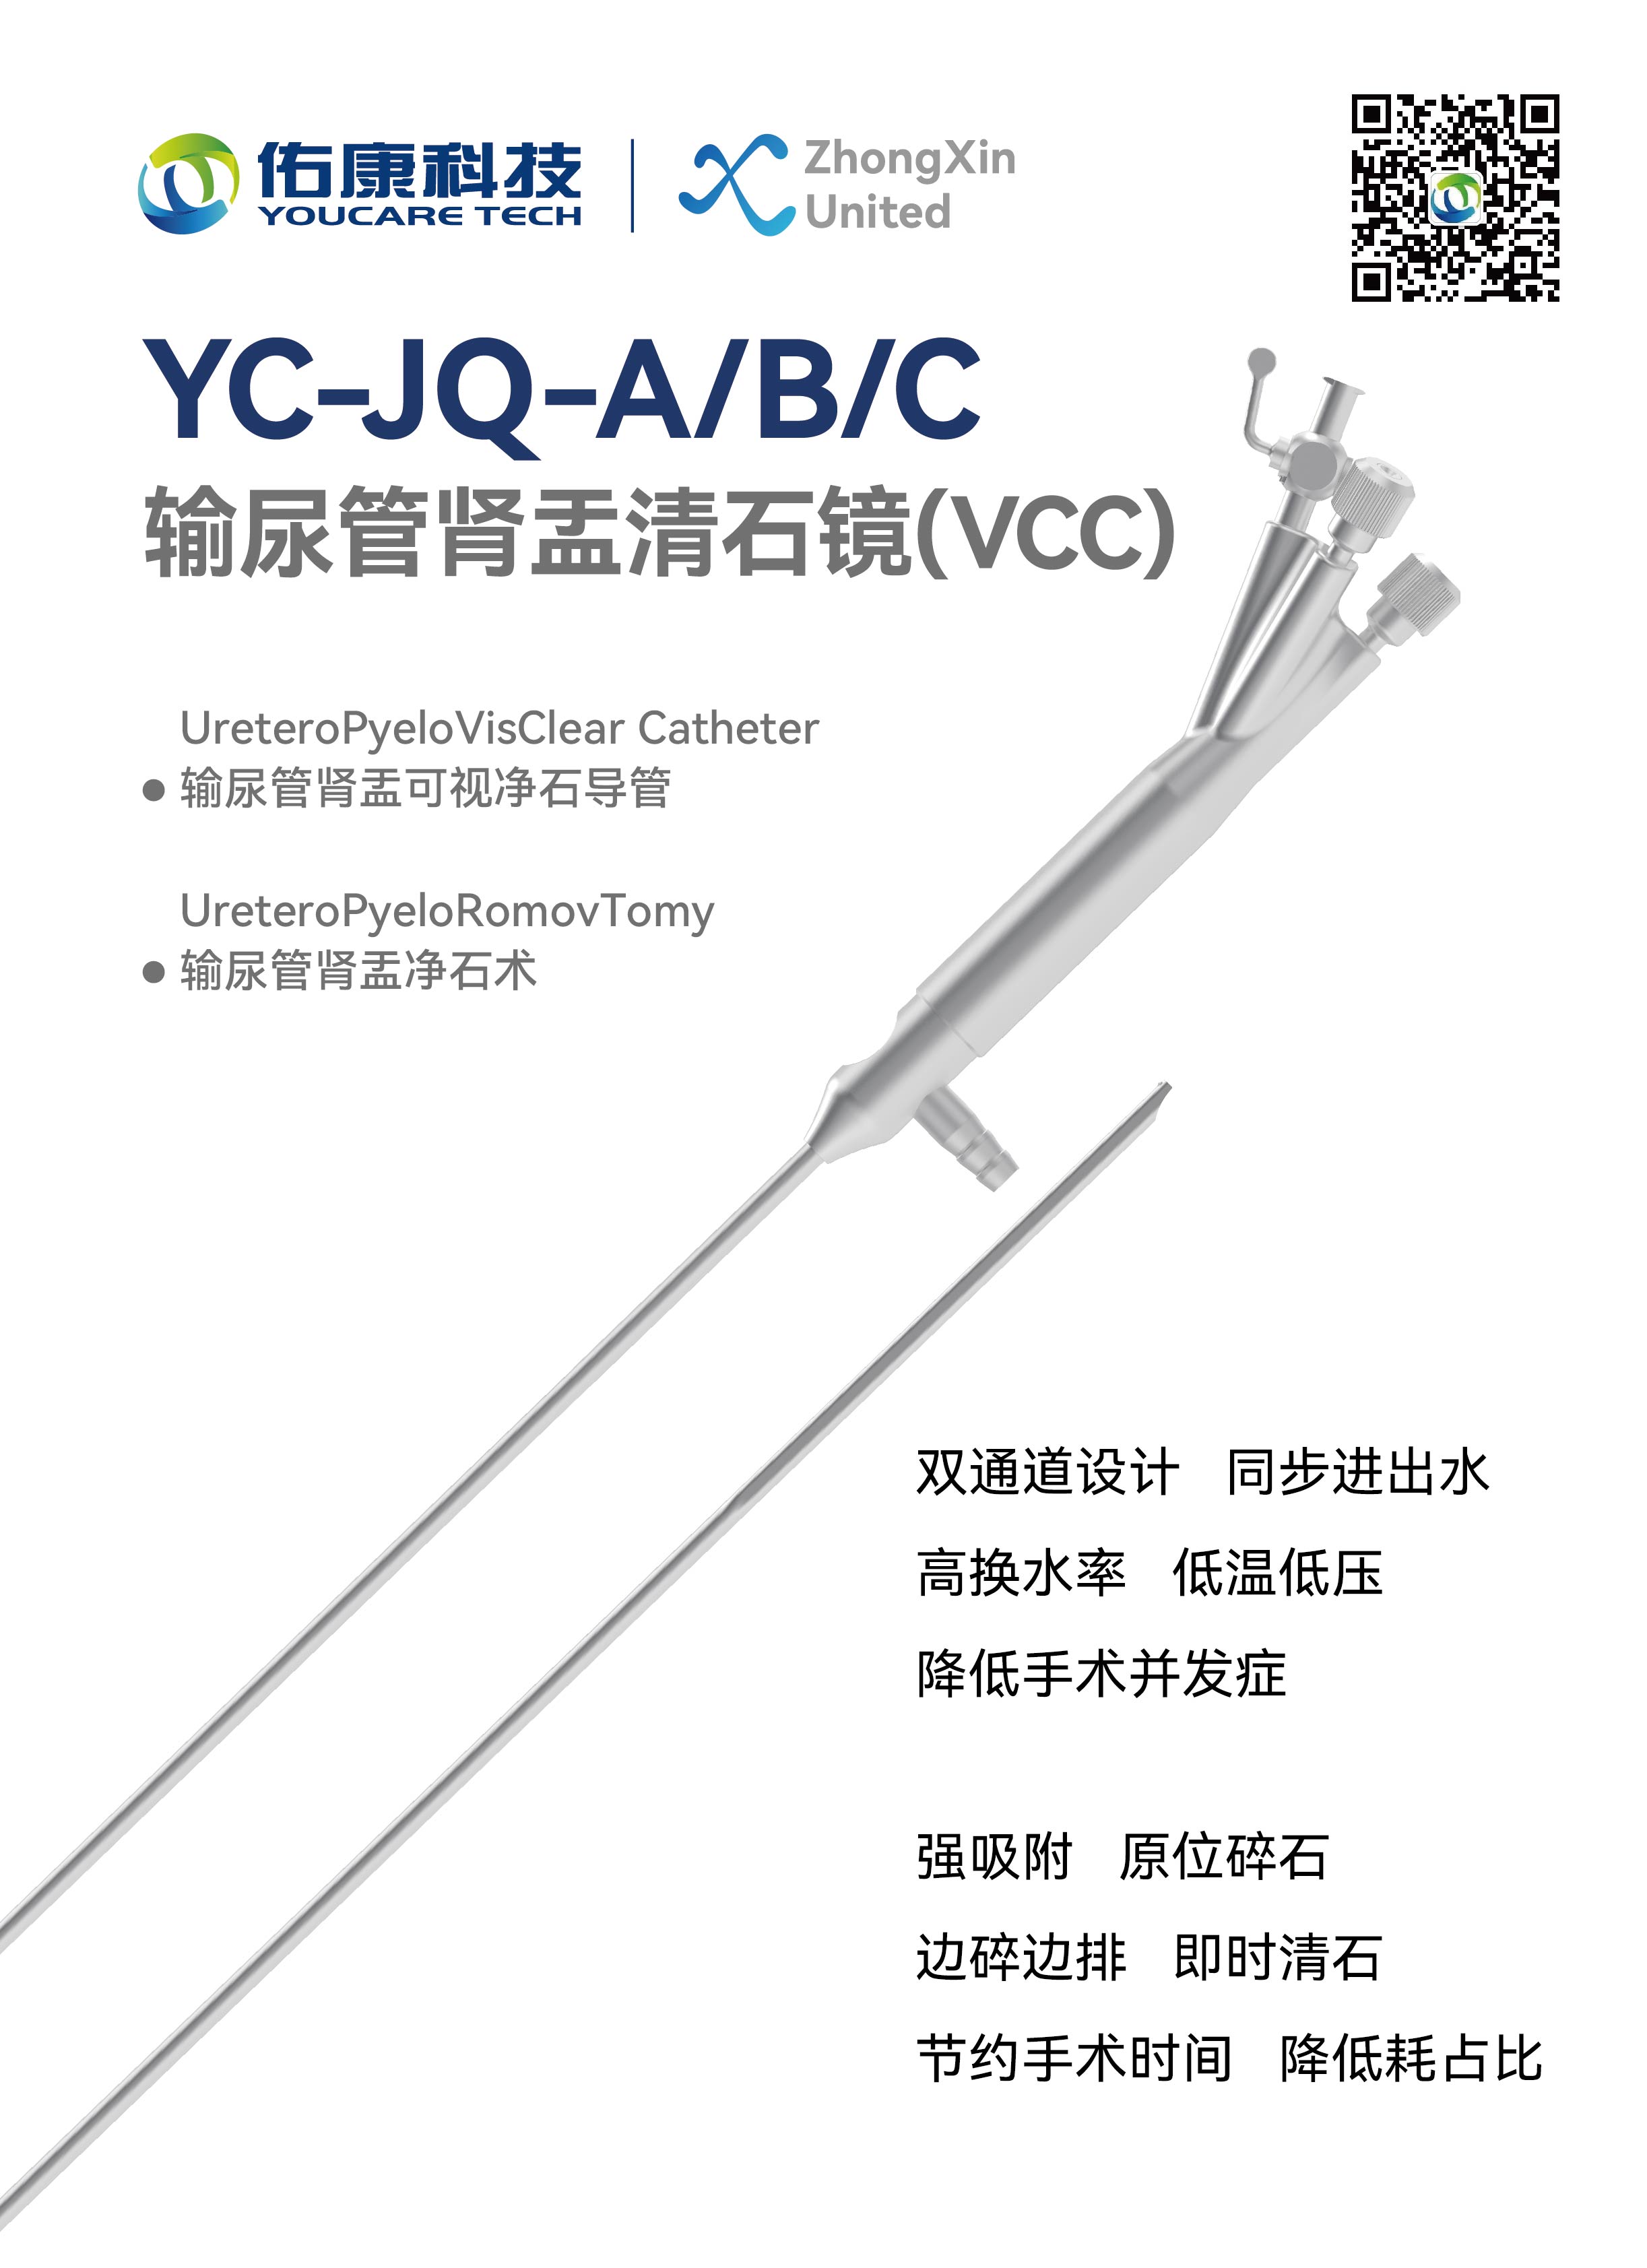 UreteroPyeloVisClear Catheter (VCC)